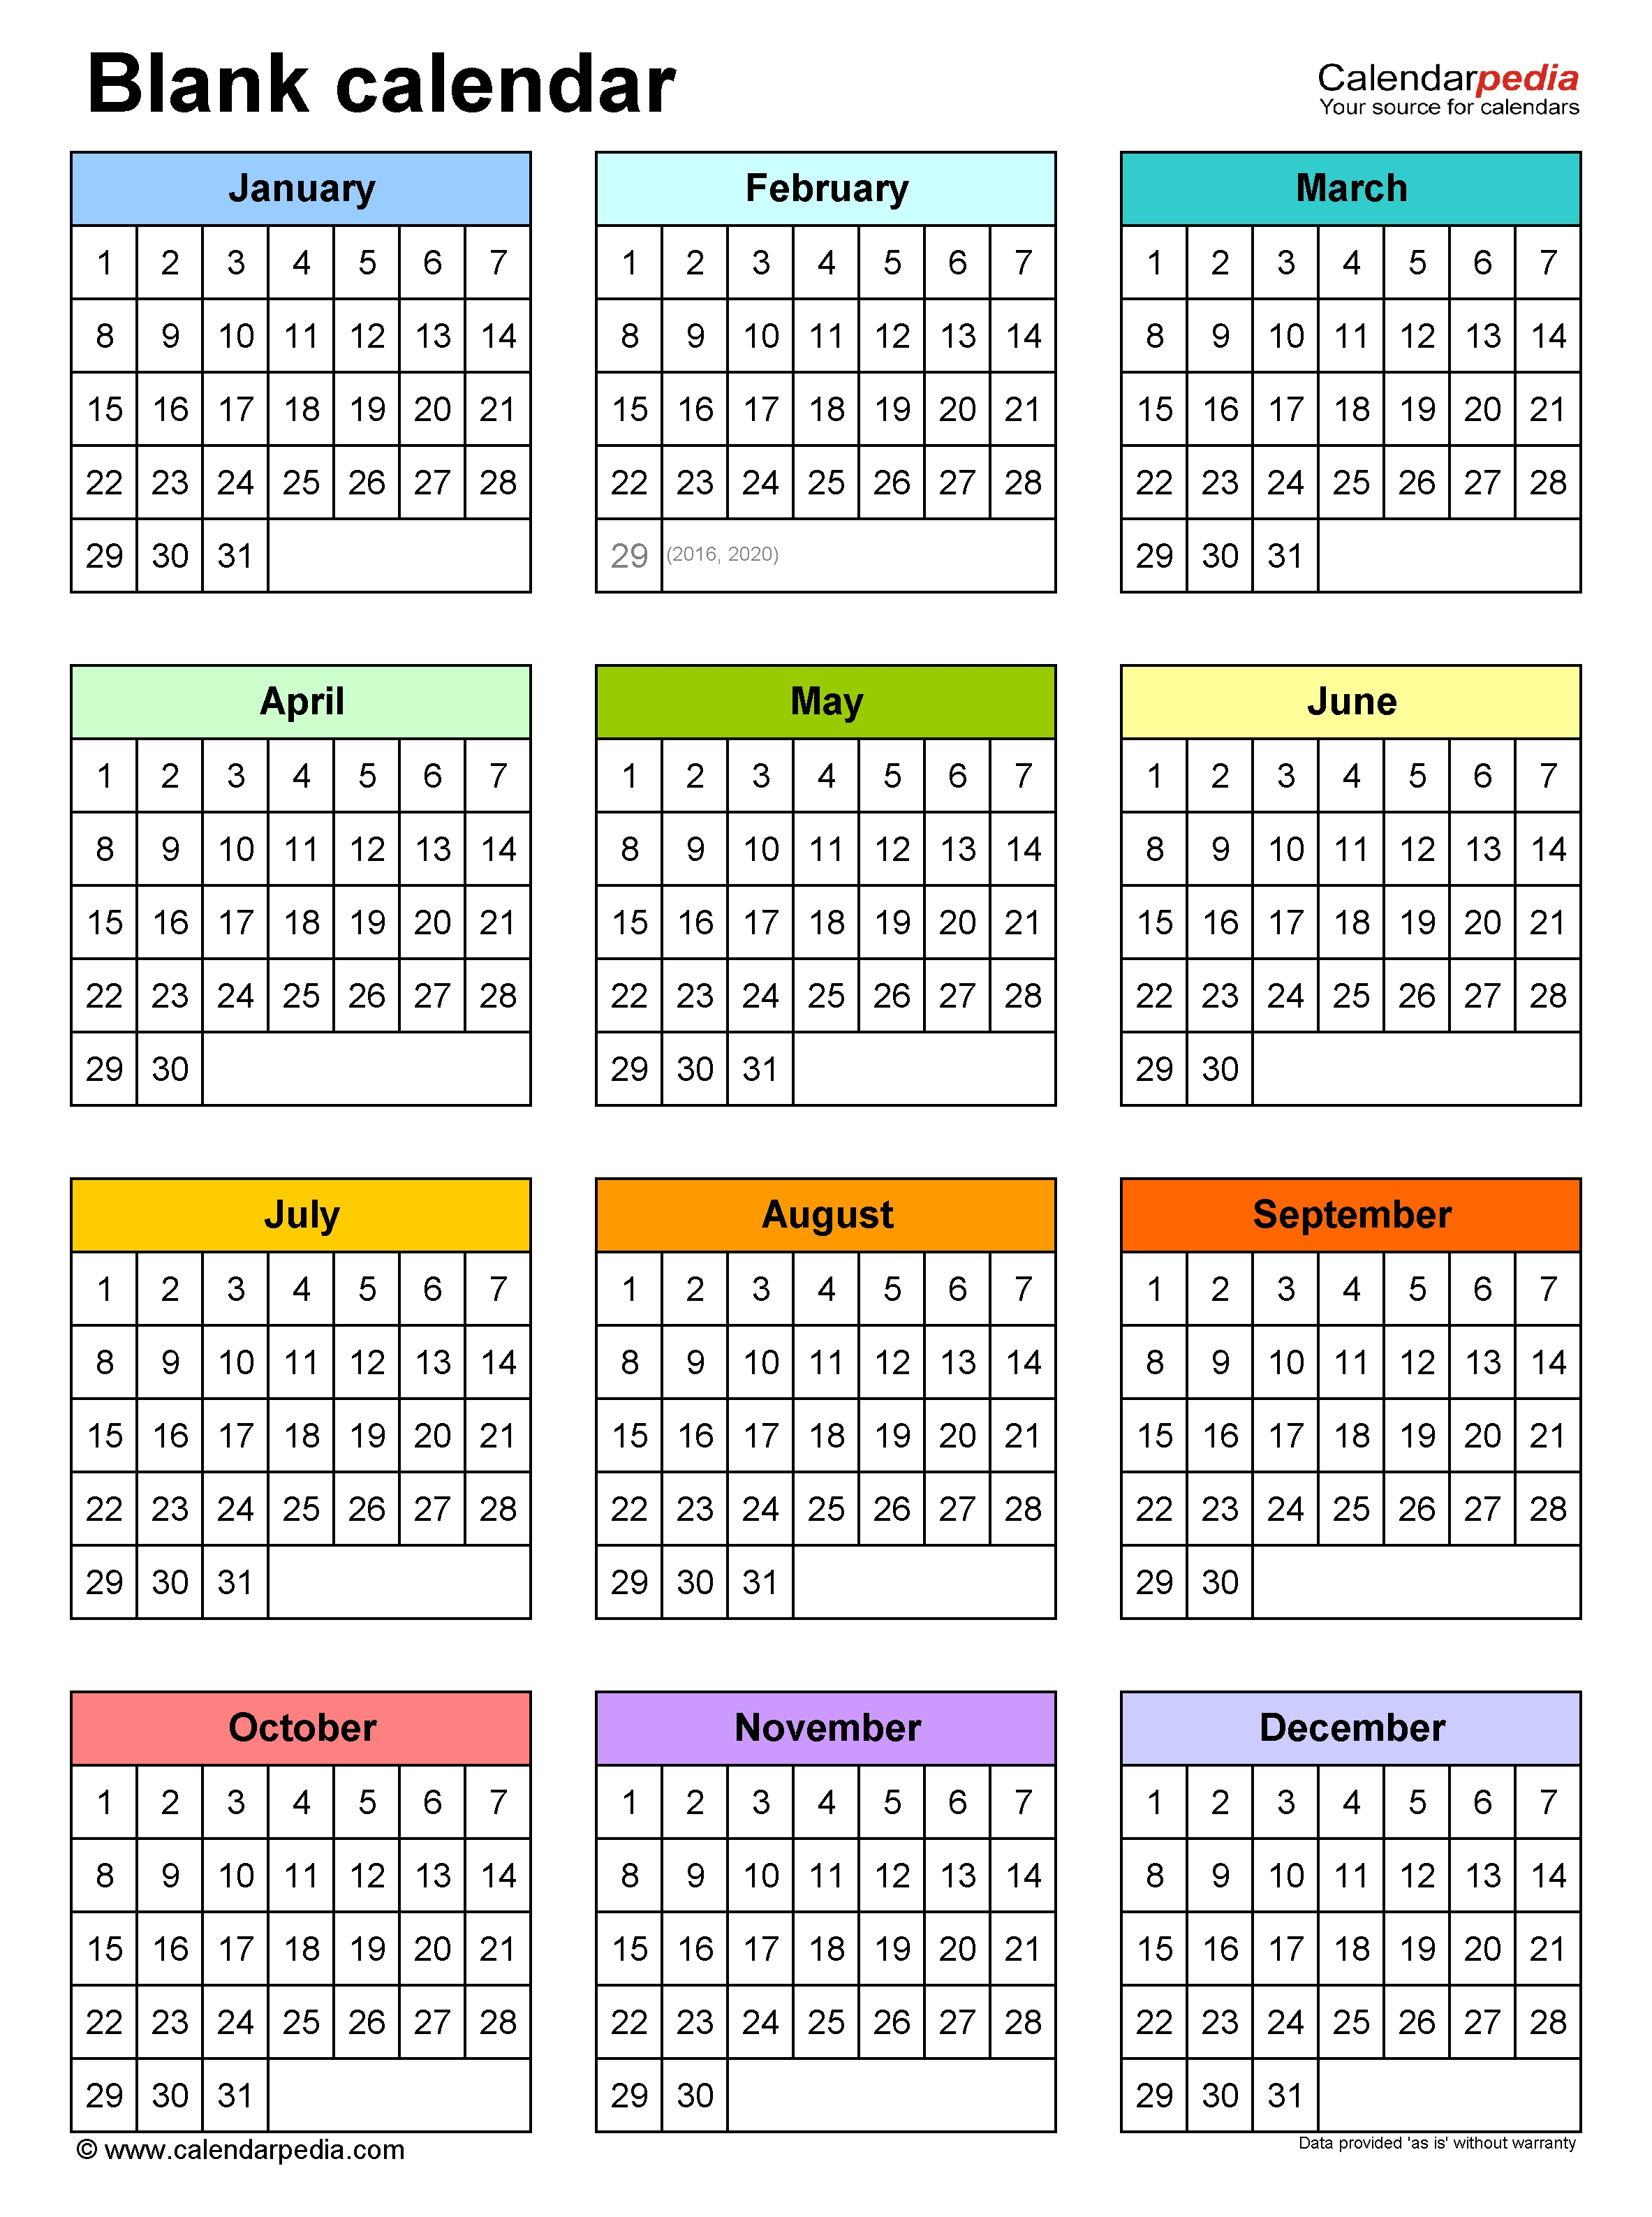 Blank Calendars - Free Printable Microsoft Word Templates Year Round Calendar Template